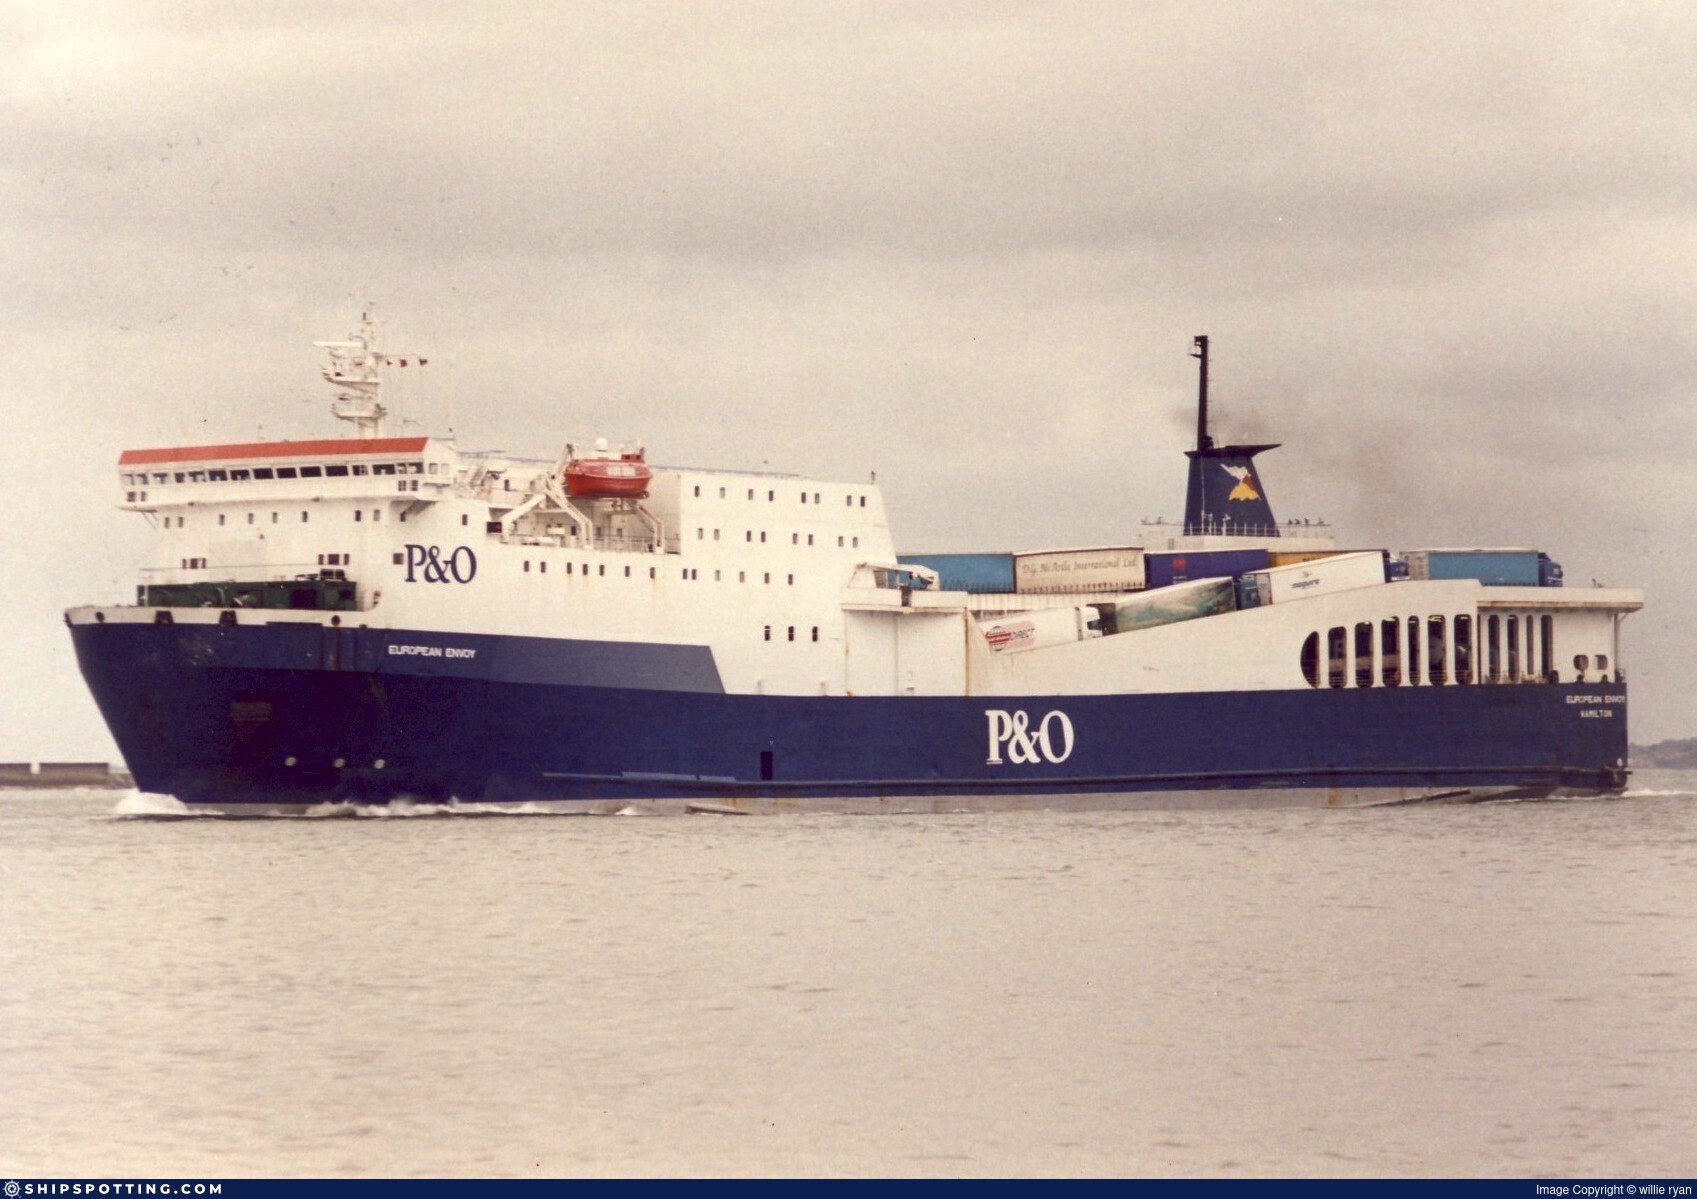 Ibex - Norsea - Norsky - European Envoy - Envoy - Ferry